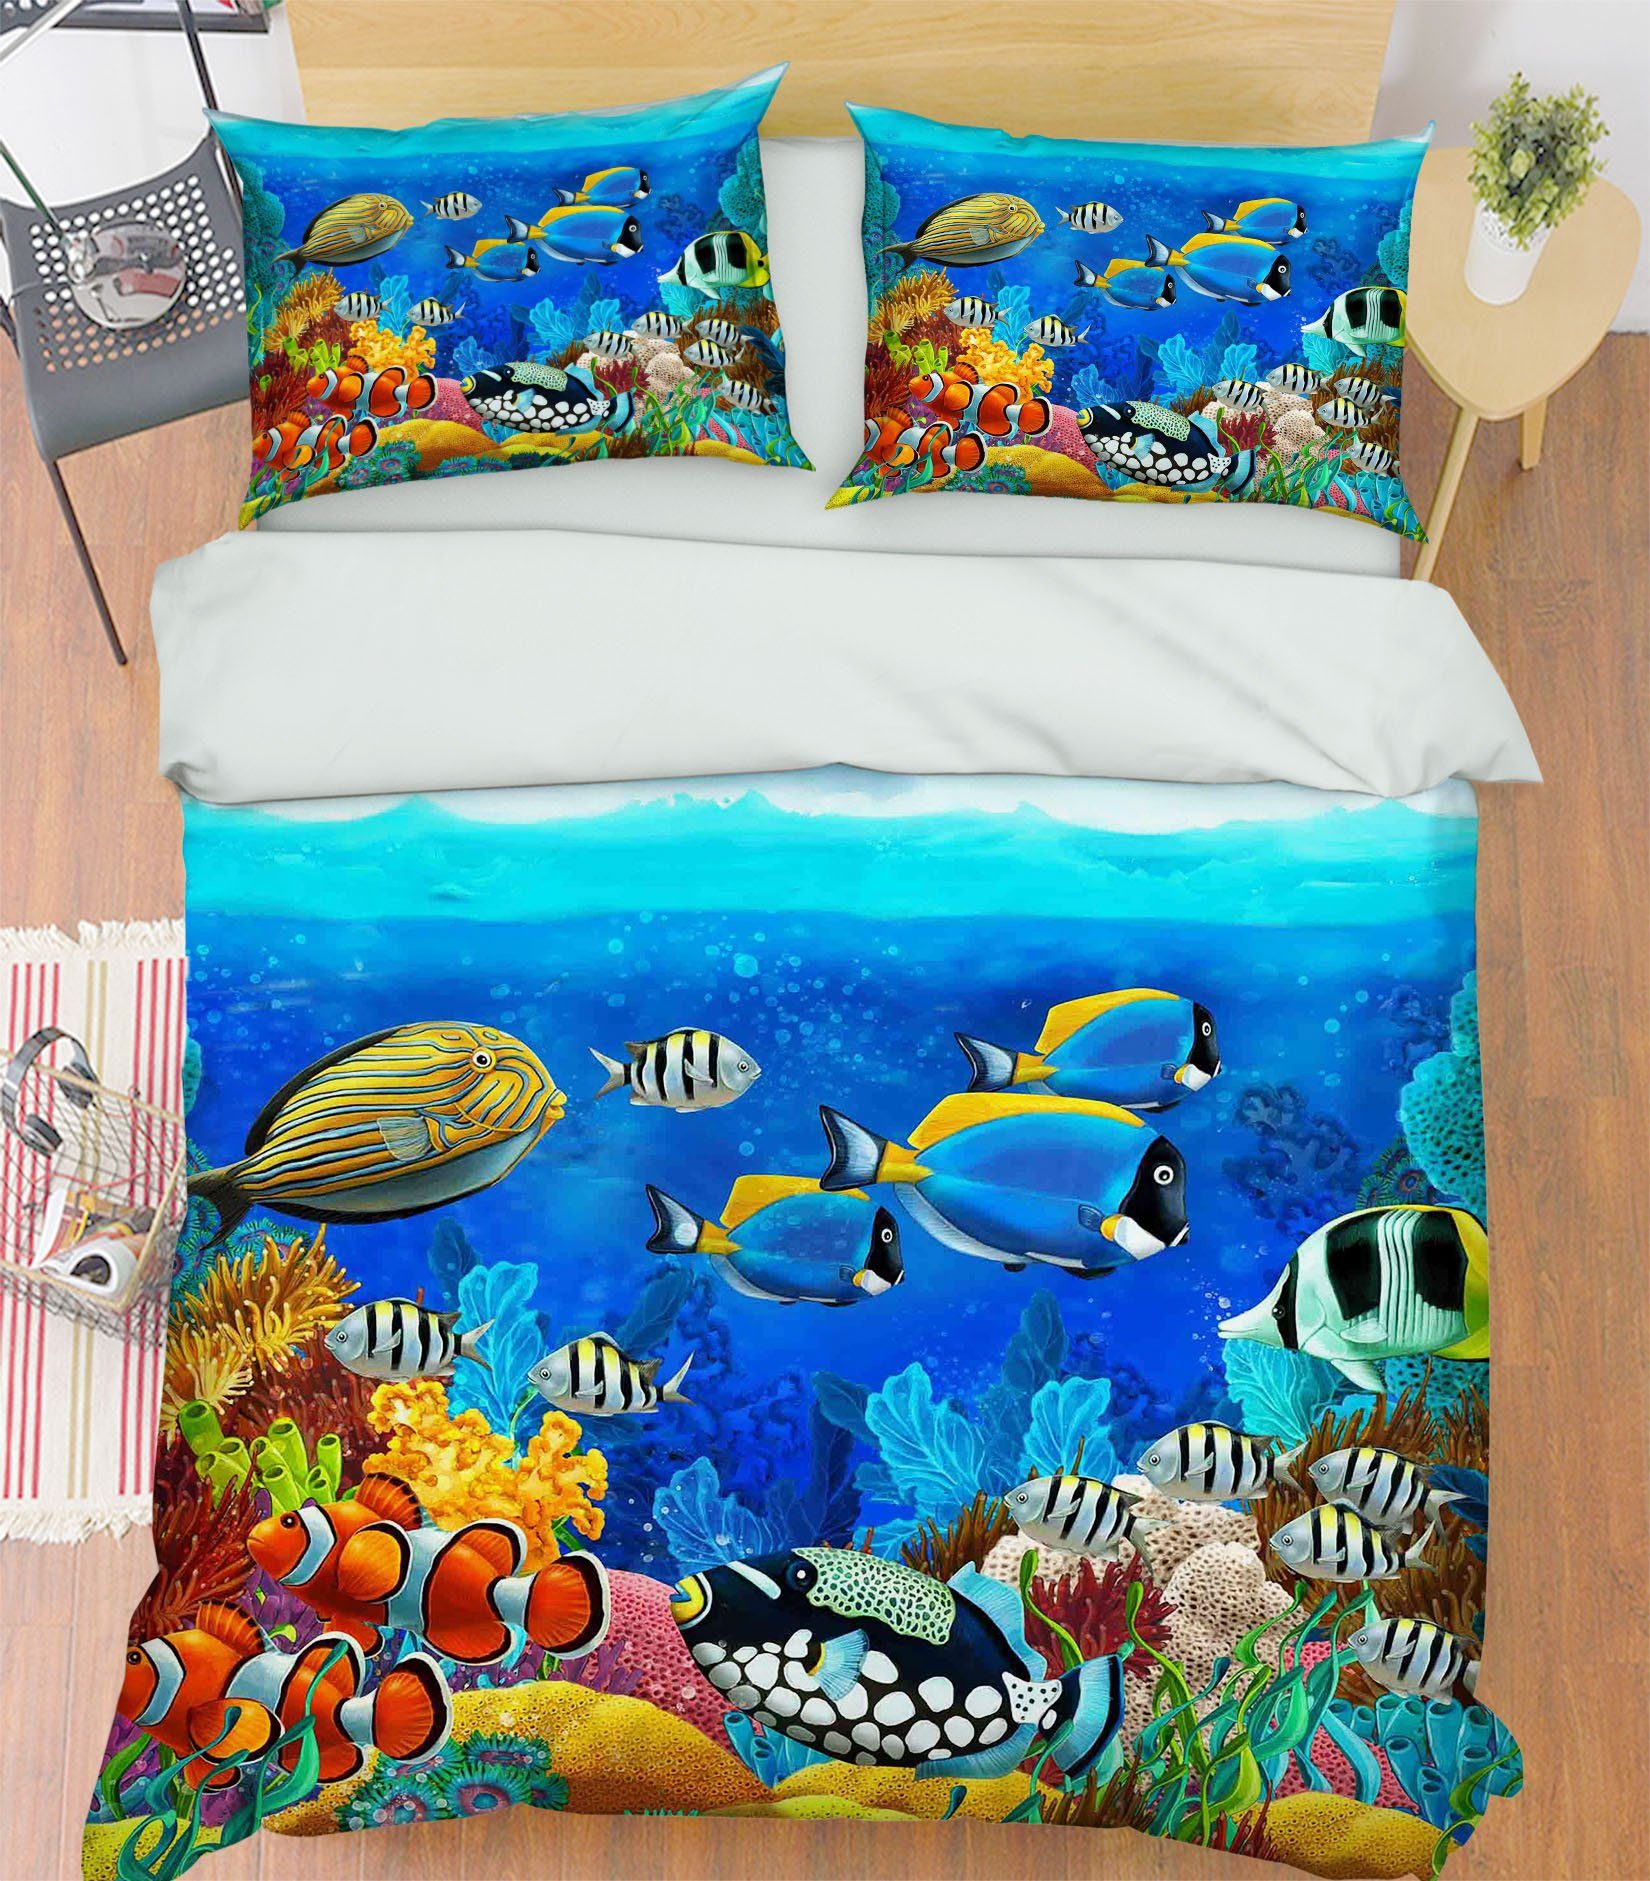 3D Bright Ocean World 246 Bed Pillowcases Quilt Wallpaper AJ Wallpaper 